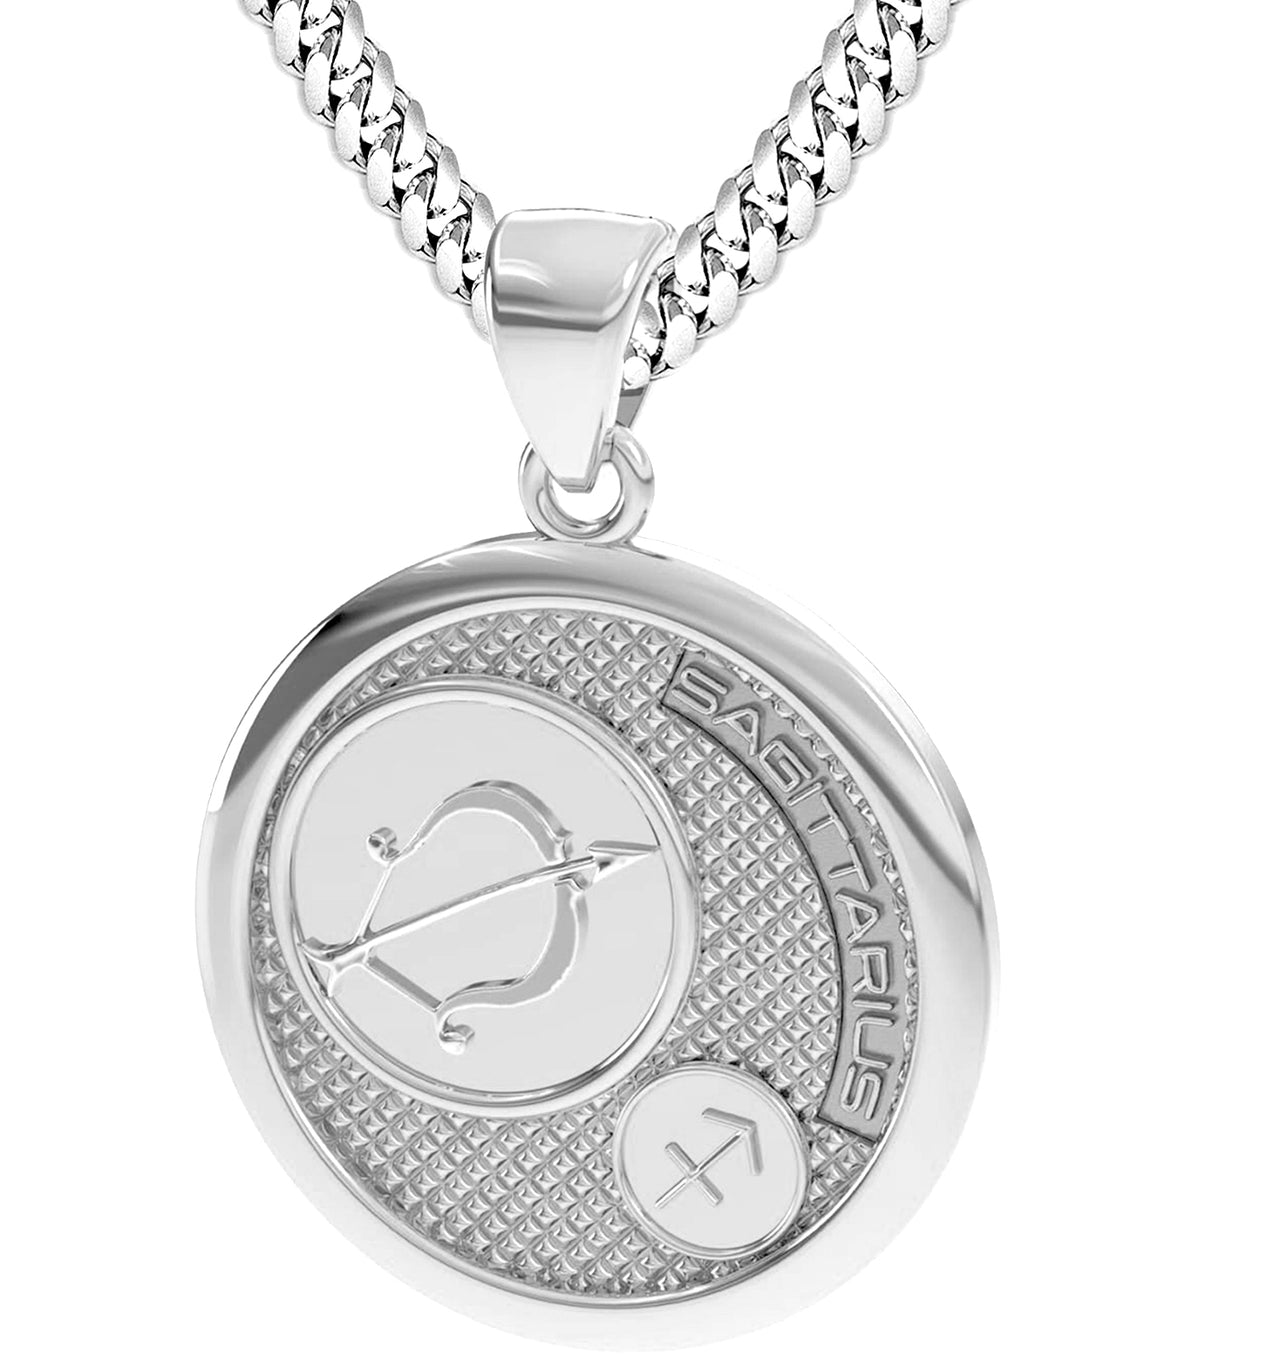 Men's 925 Sterling Silver Round Sagittarius Zodiac Polished Finish Pendant Necklace, 33mm